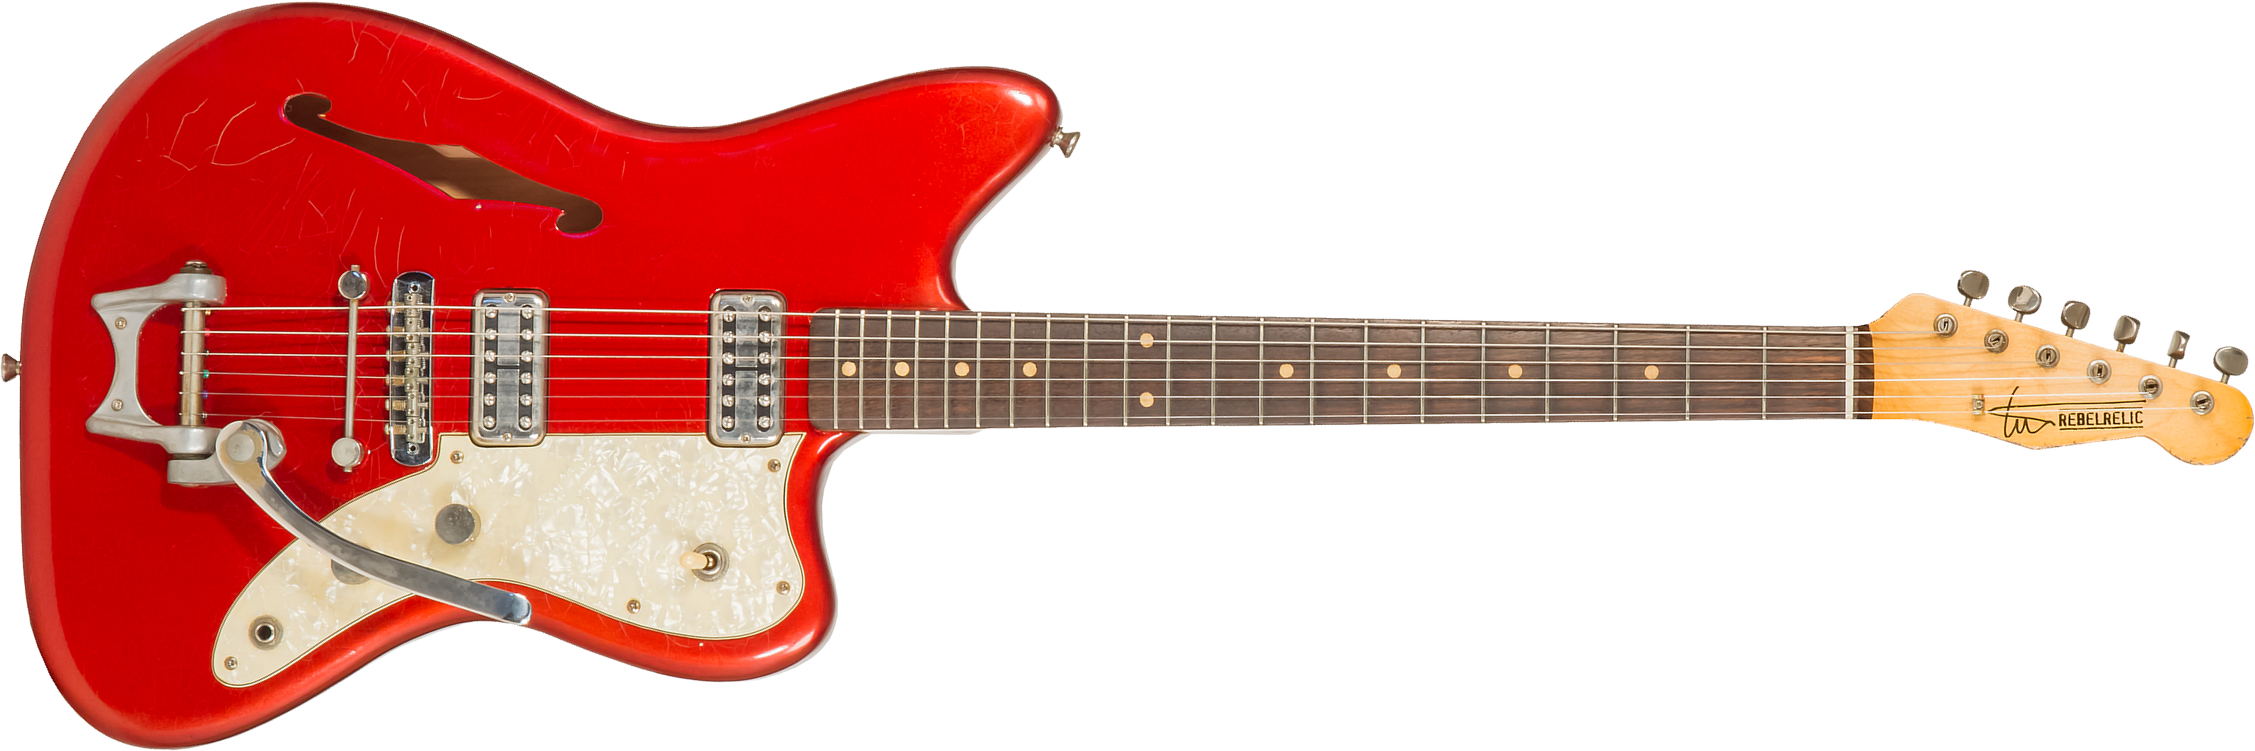 Rebelrelic Wrangler 2h Trem Rw #62175 - Light Aged Candy Apple Red - Guitare Électrique 1/2 Caisse - Main picture